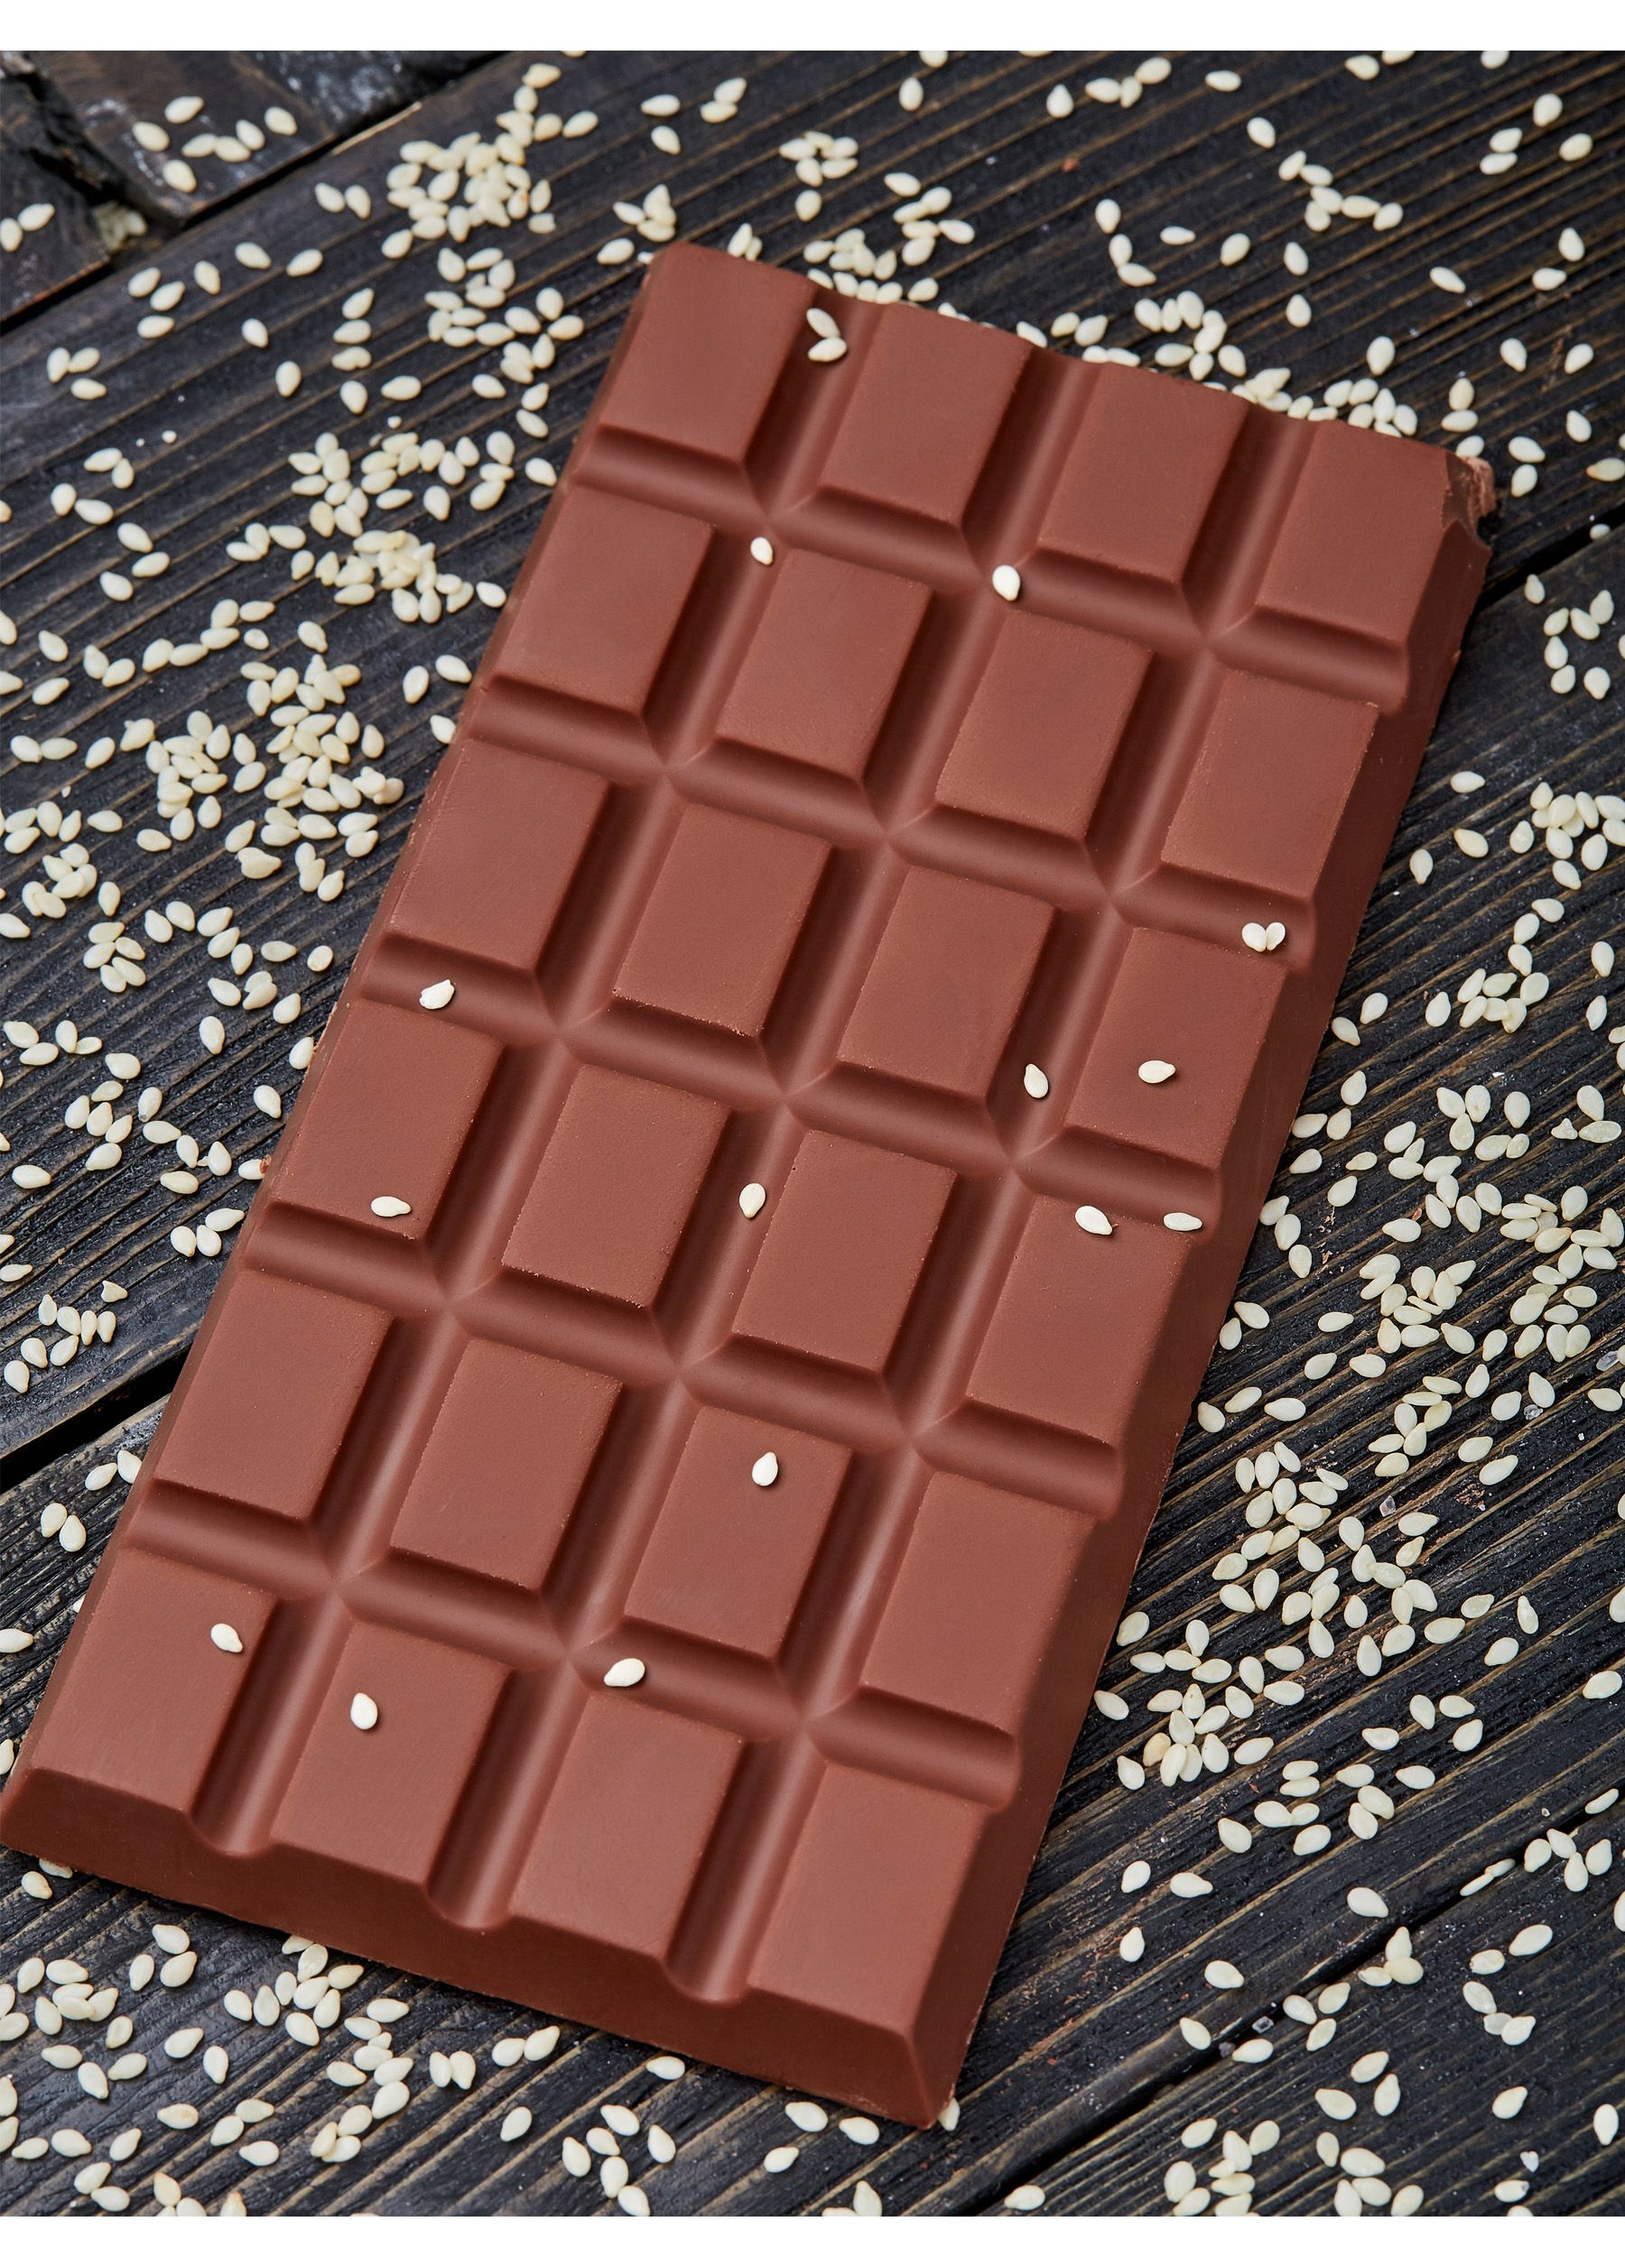 1 5 плитки шоколада. Шоколад плитка 4life. Плитки шоколада с БТС. Шоколадная плитка.